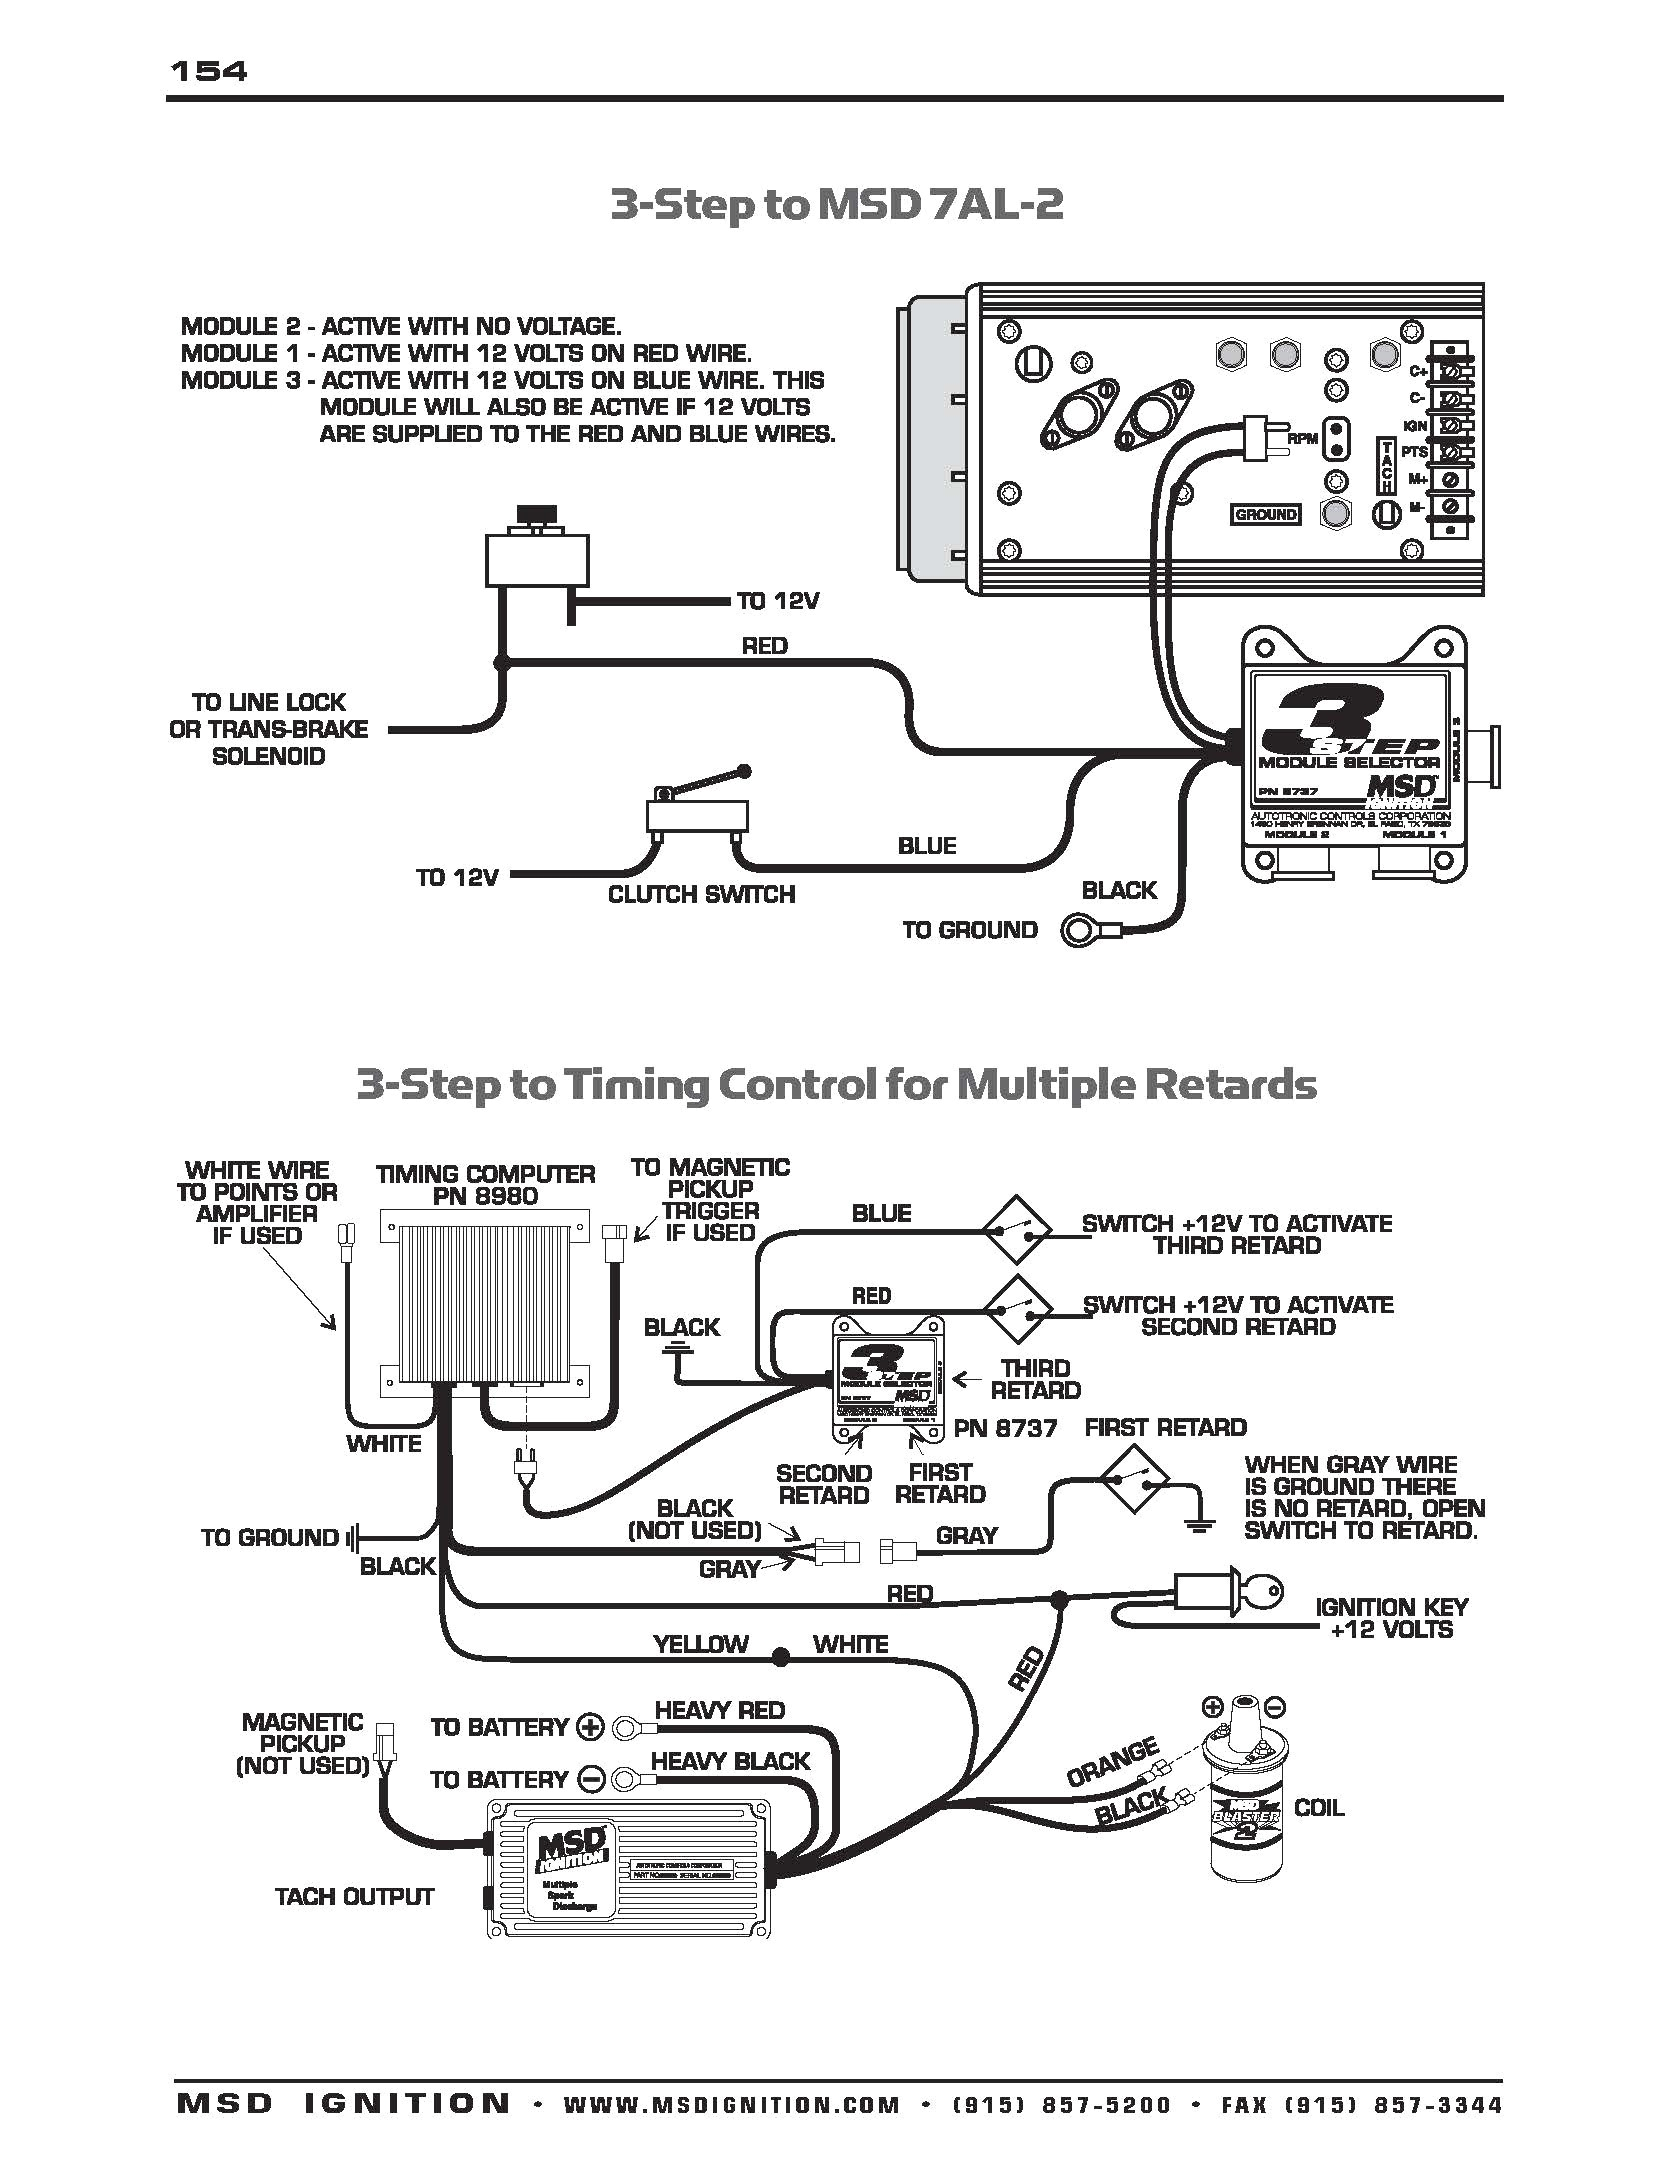 wiring diagram for msd wiring diagram centremsd grid ignition wiring diagram u2013 schematic diagrams